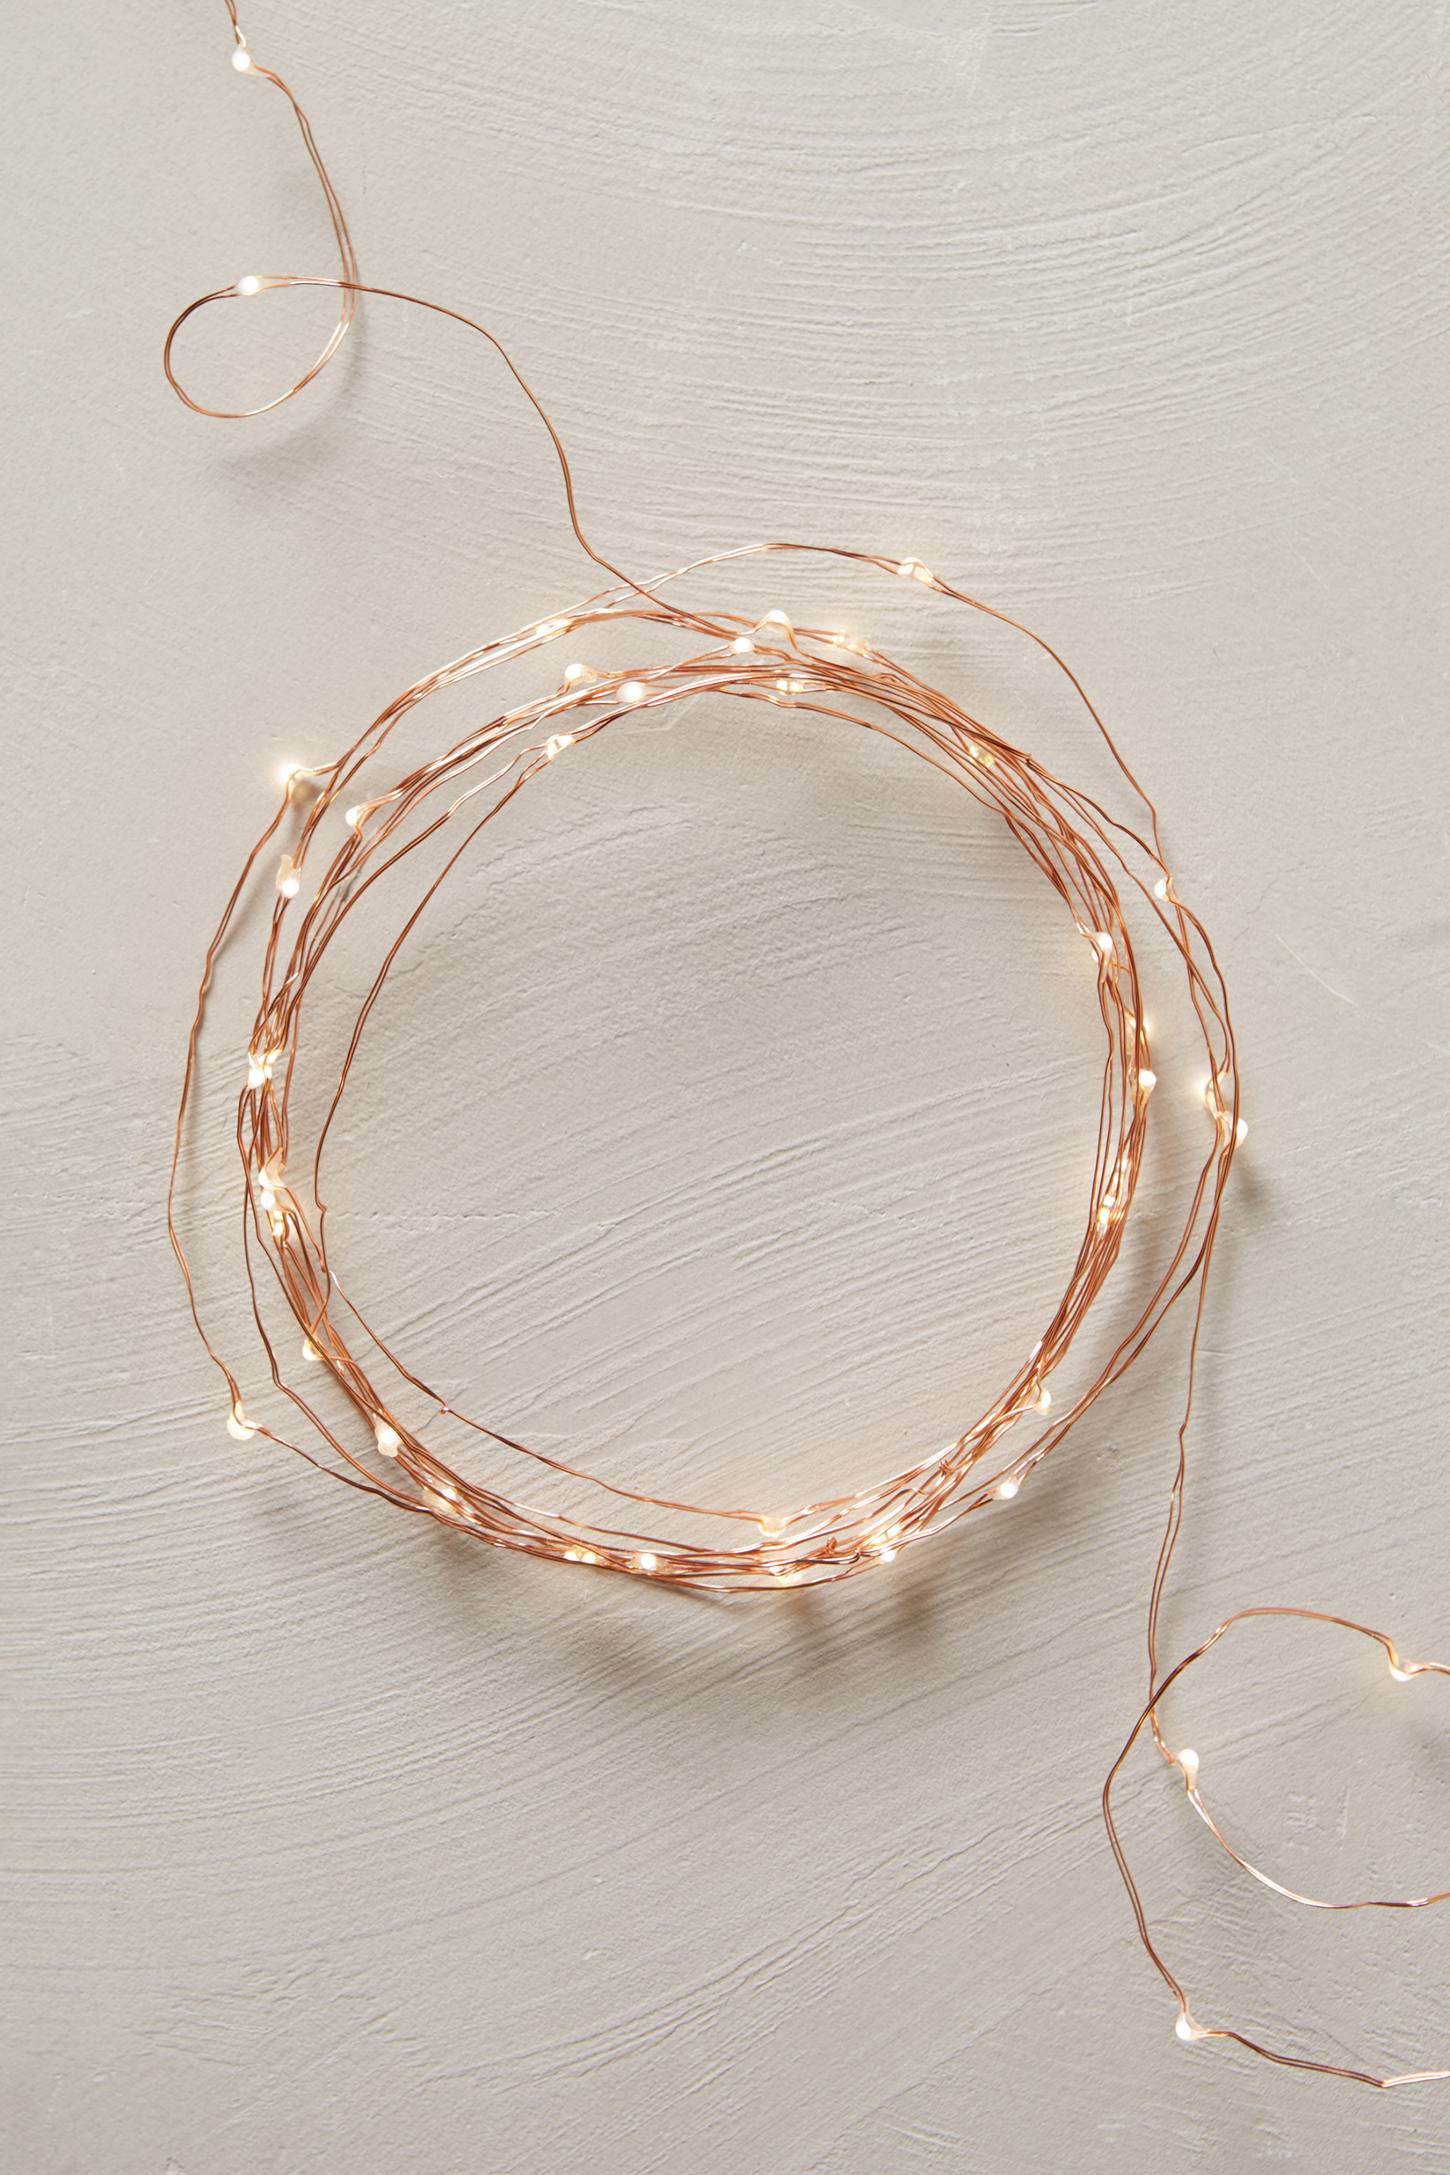 Copper string lights